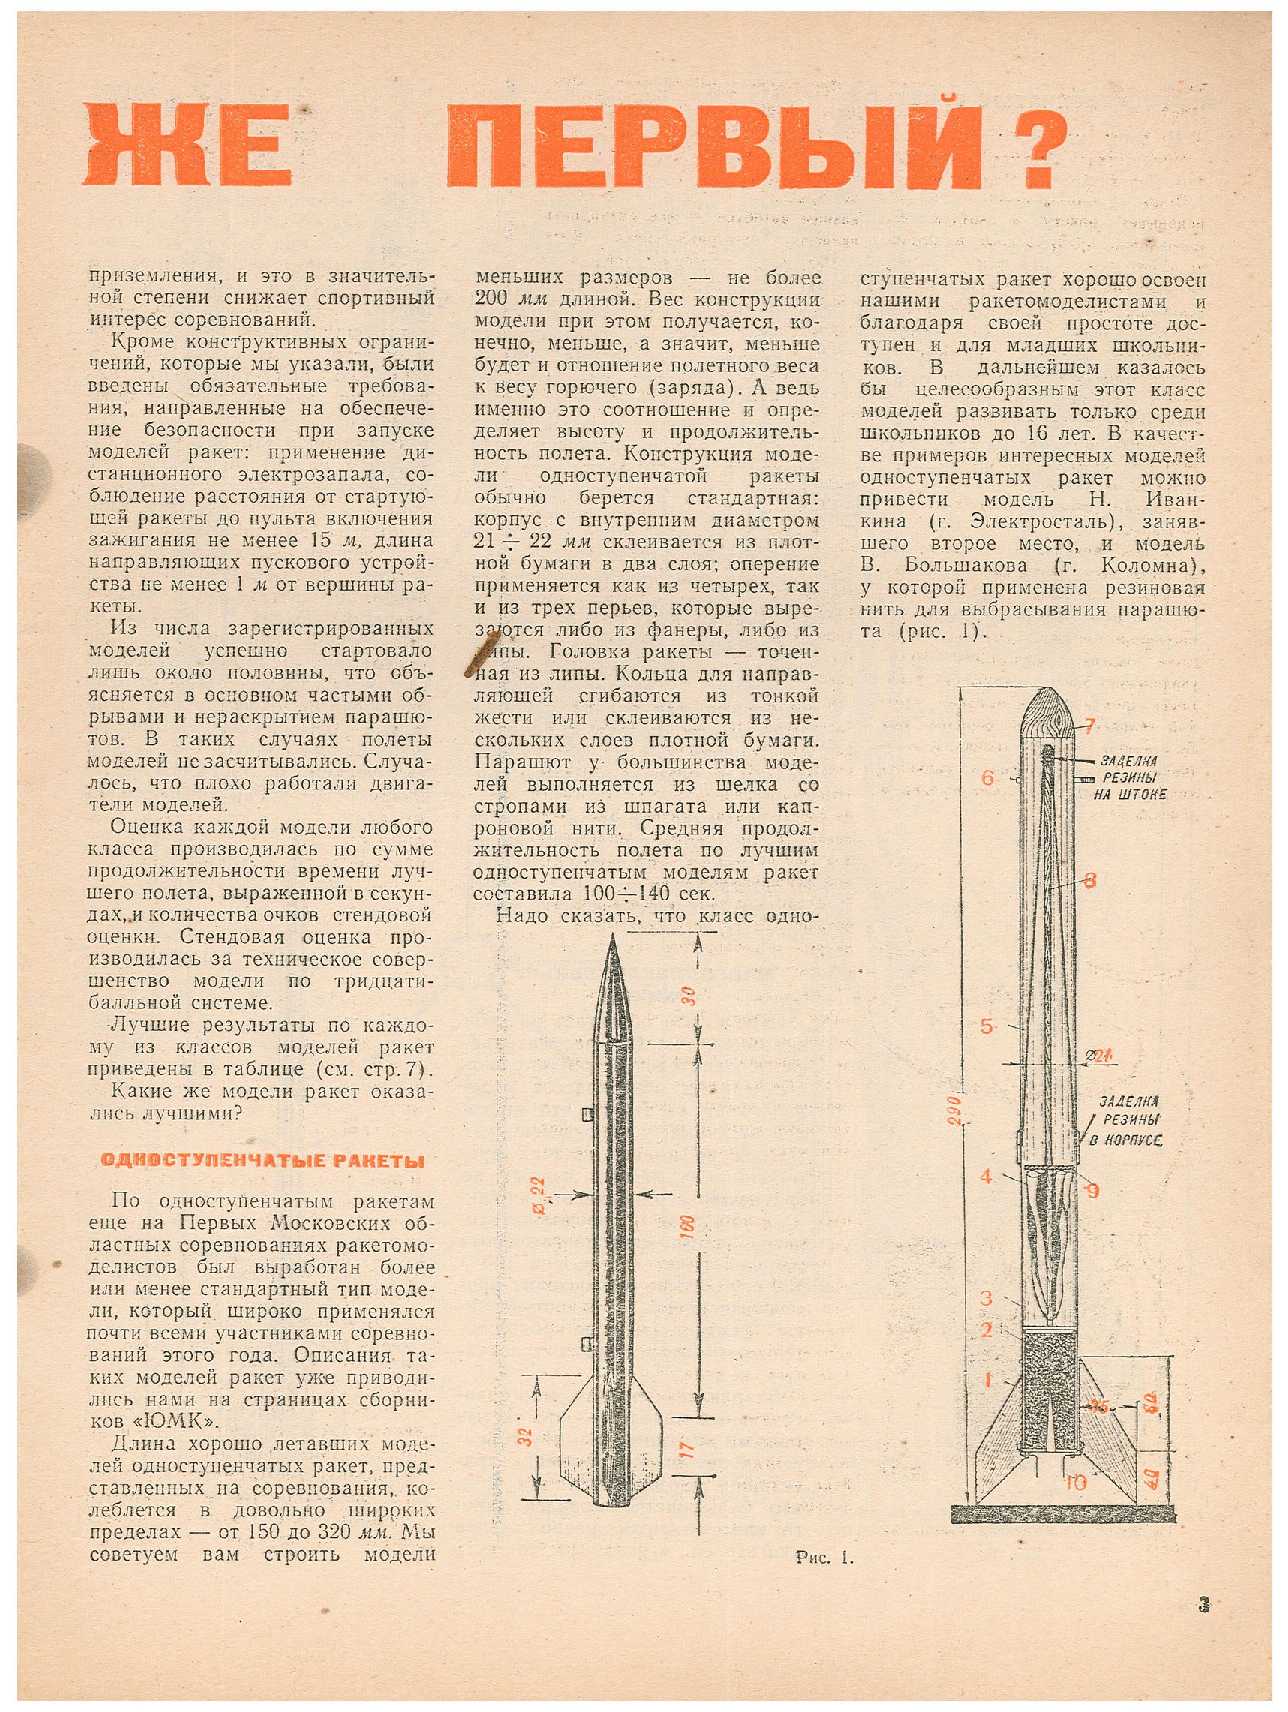 ЮМК 7, 1964, 3 c.